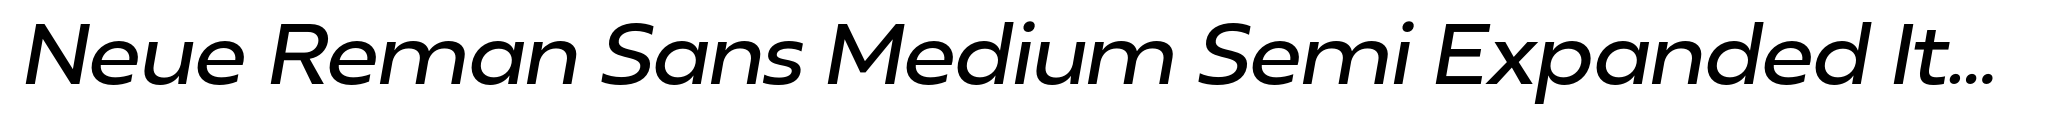 Neue Reman Sans Medium Semi Expanded Italic image